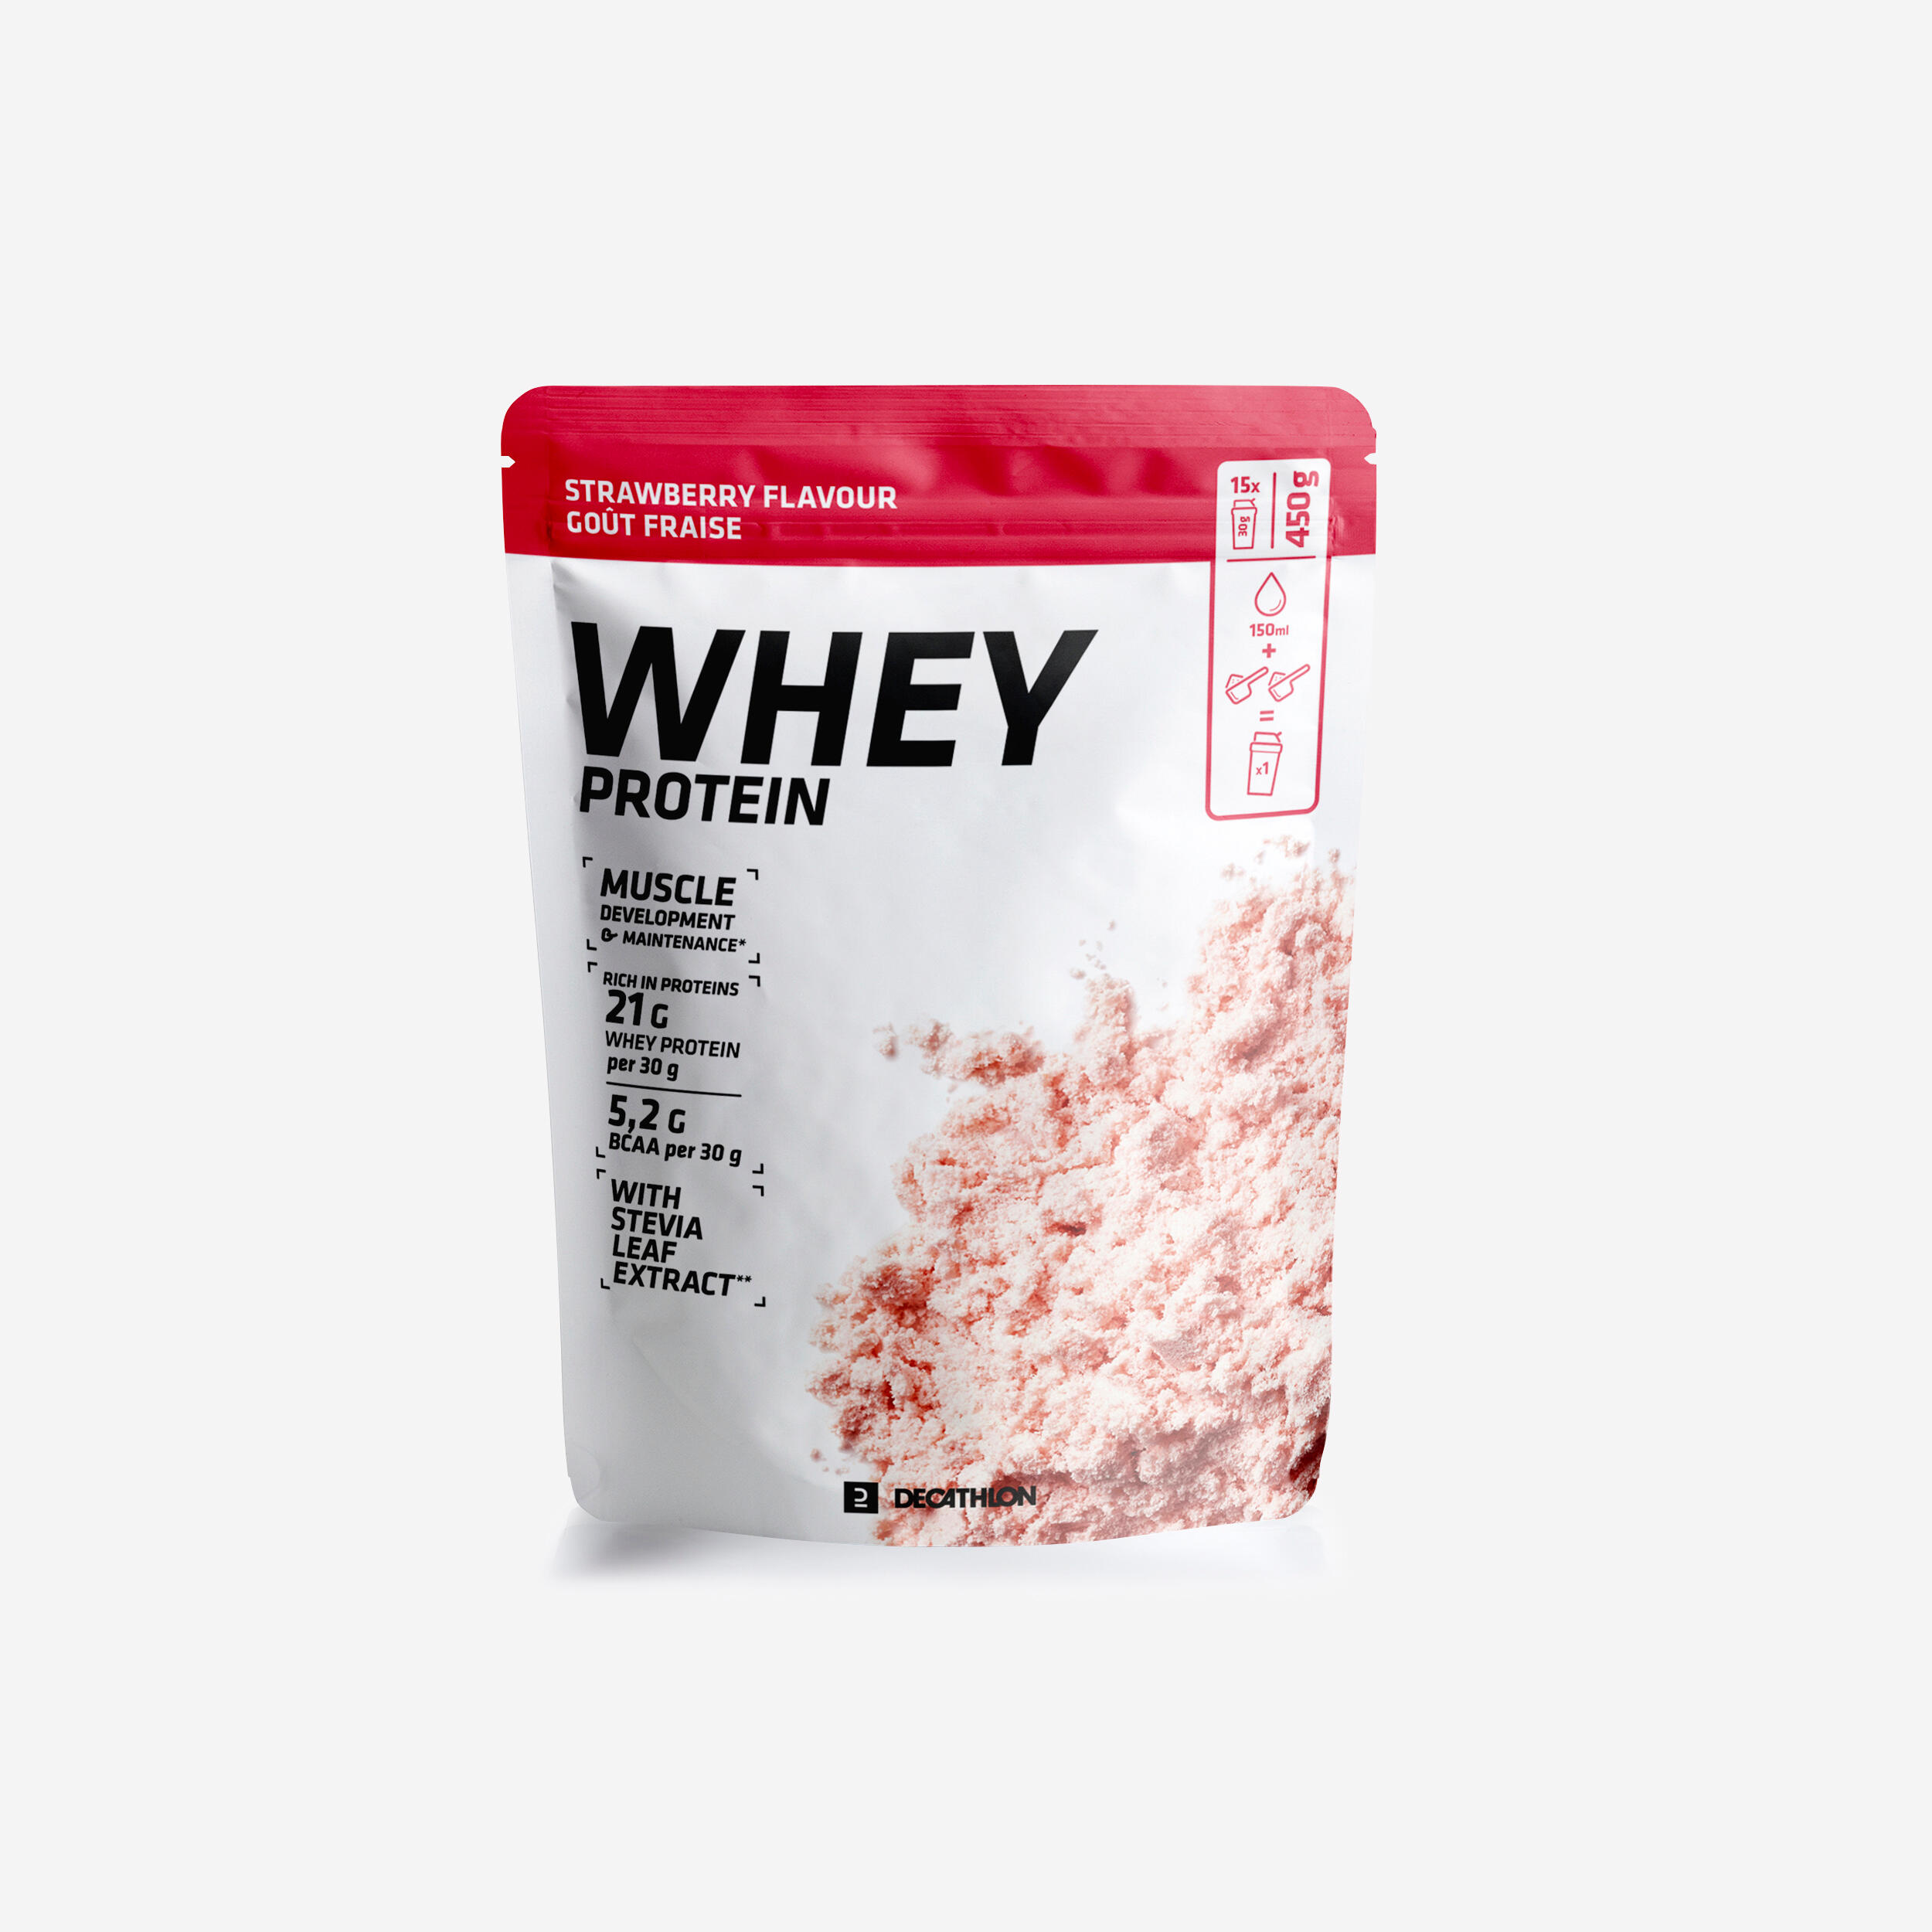 Whey Protein 450g - Strawberry 1/4